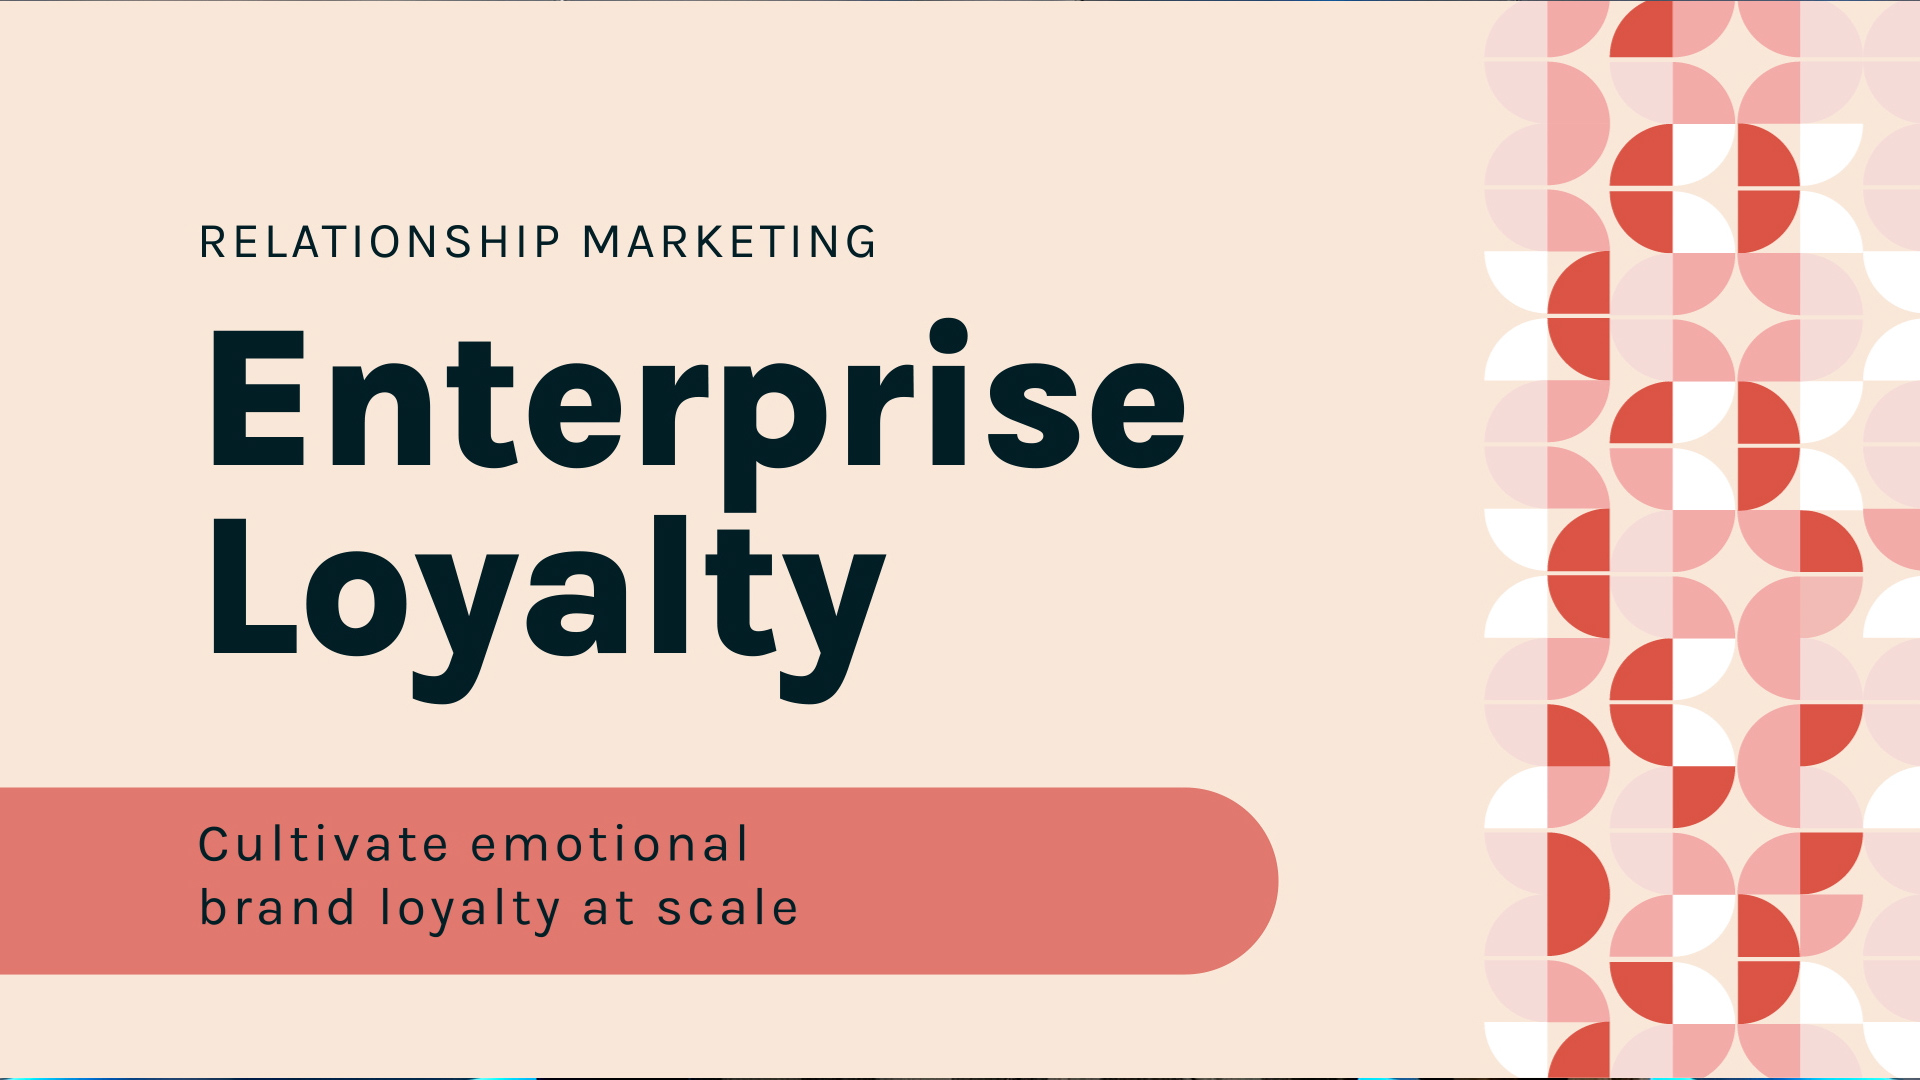 Enterprise Loyalty: Relationship Marketing Use Case